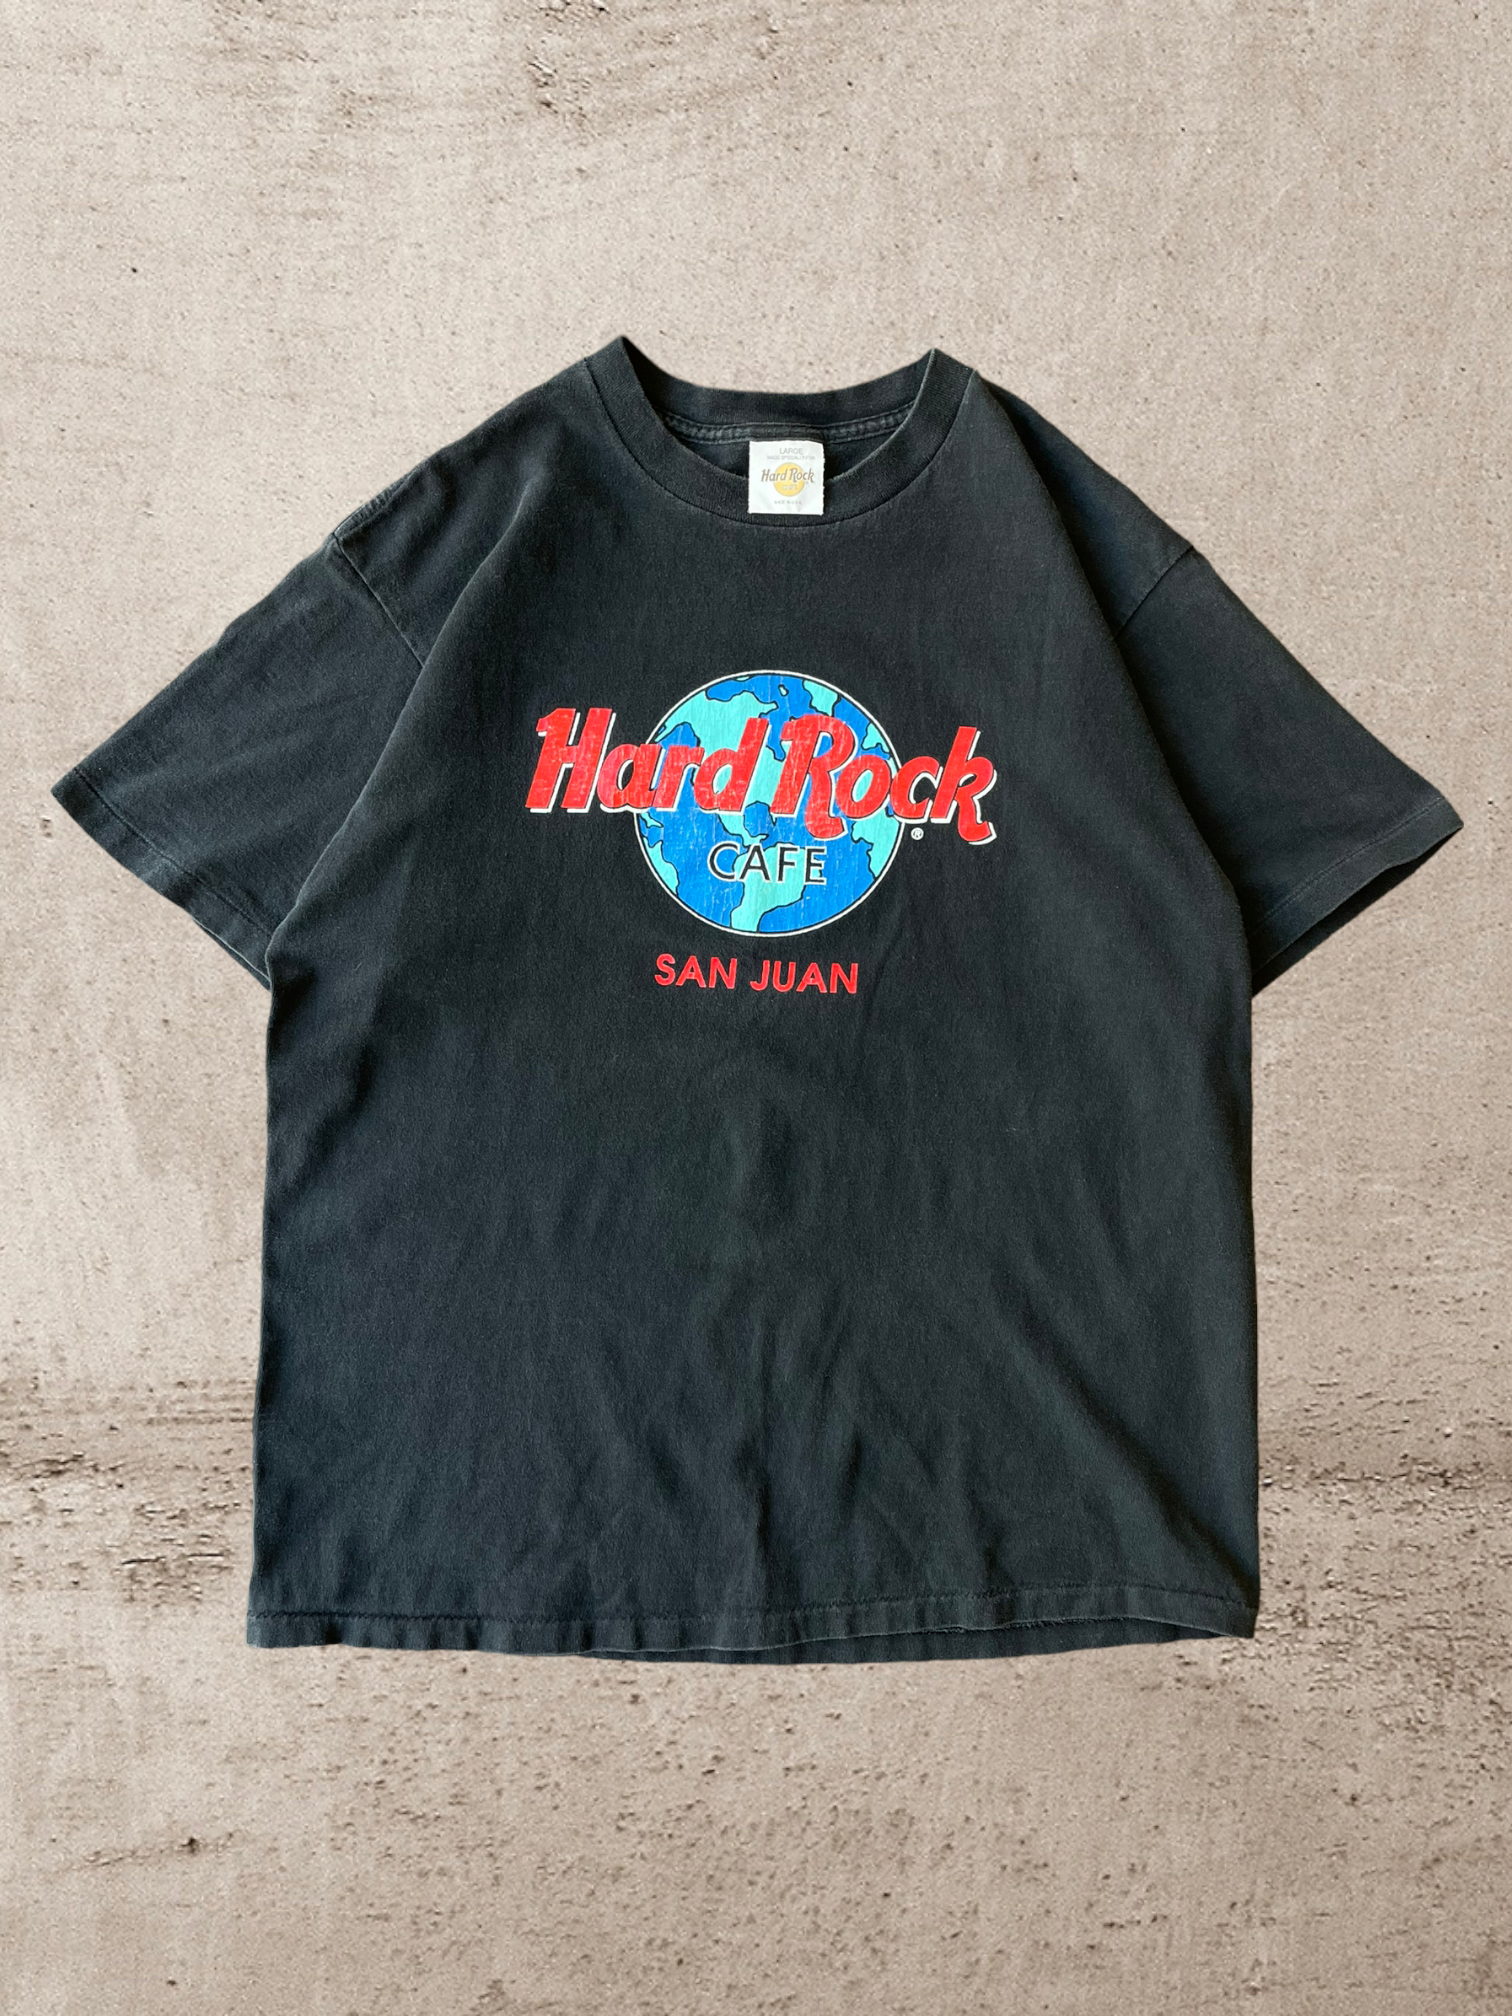 Vintage Hard Rock Cafe San Juan T-Shirt - Large